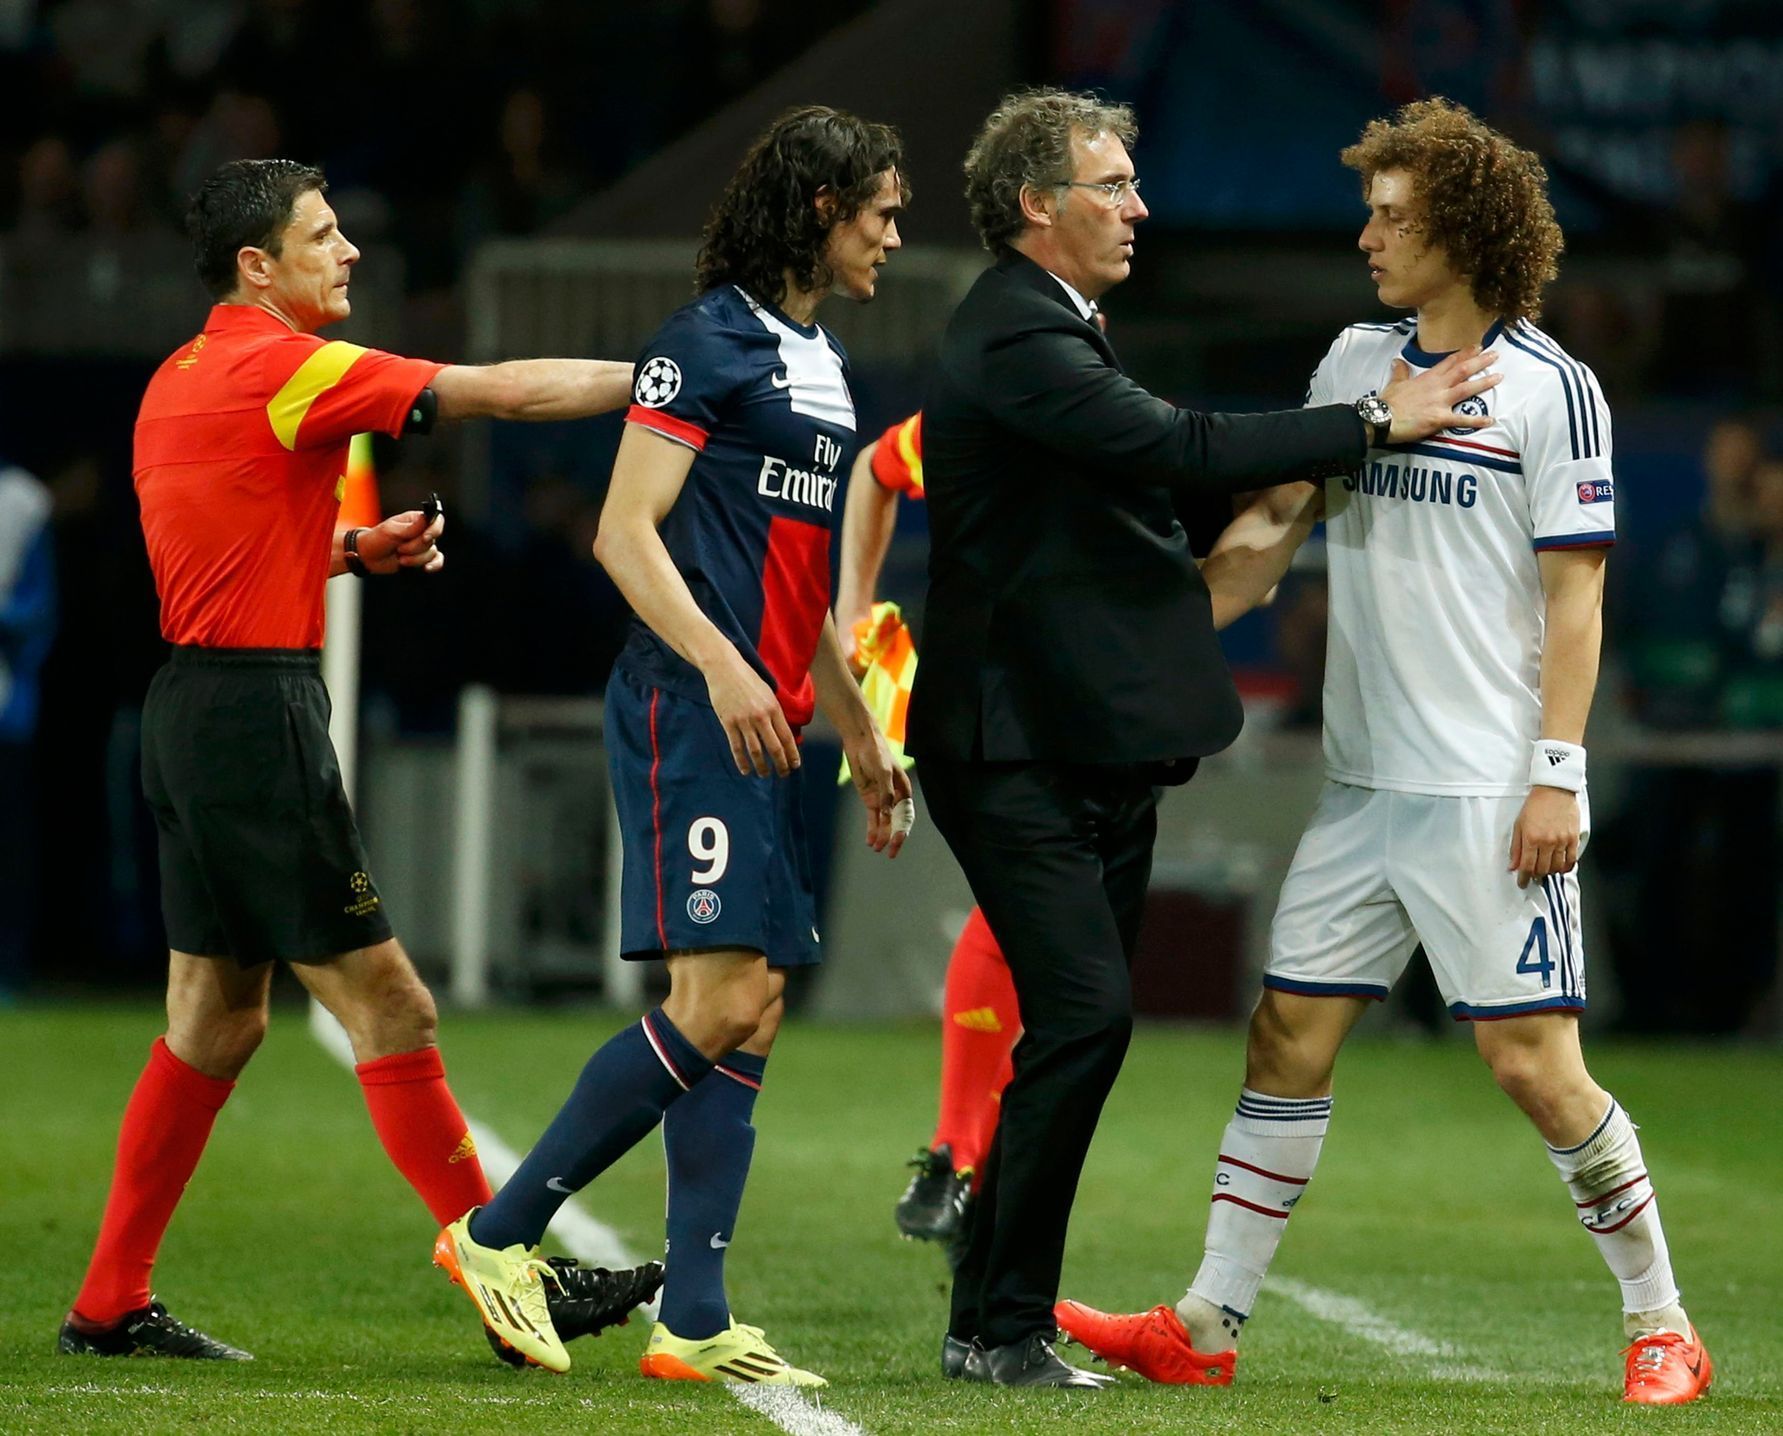 Paris St Germain coach Blanc reacts as Cavani struggles with Chelsea's Luiz during their Champions League quarter-final first leg soccer match at the Parc des Princes Stadium in Paris